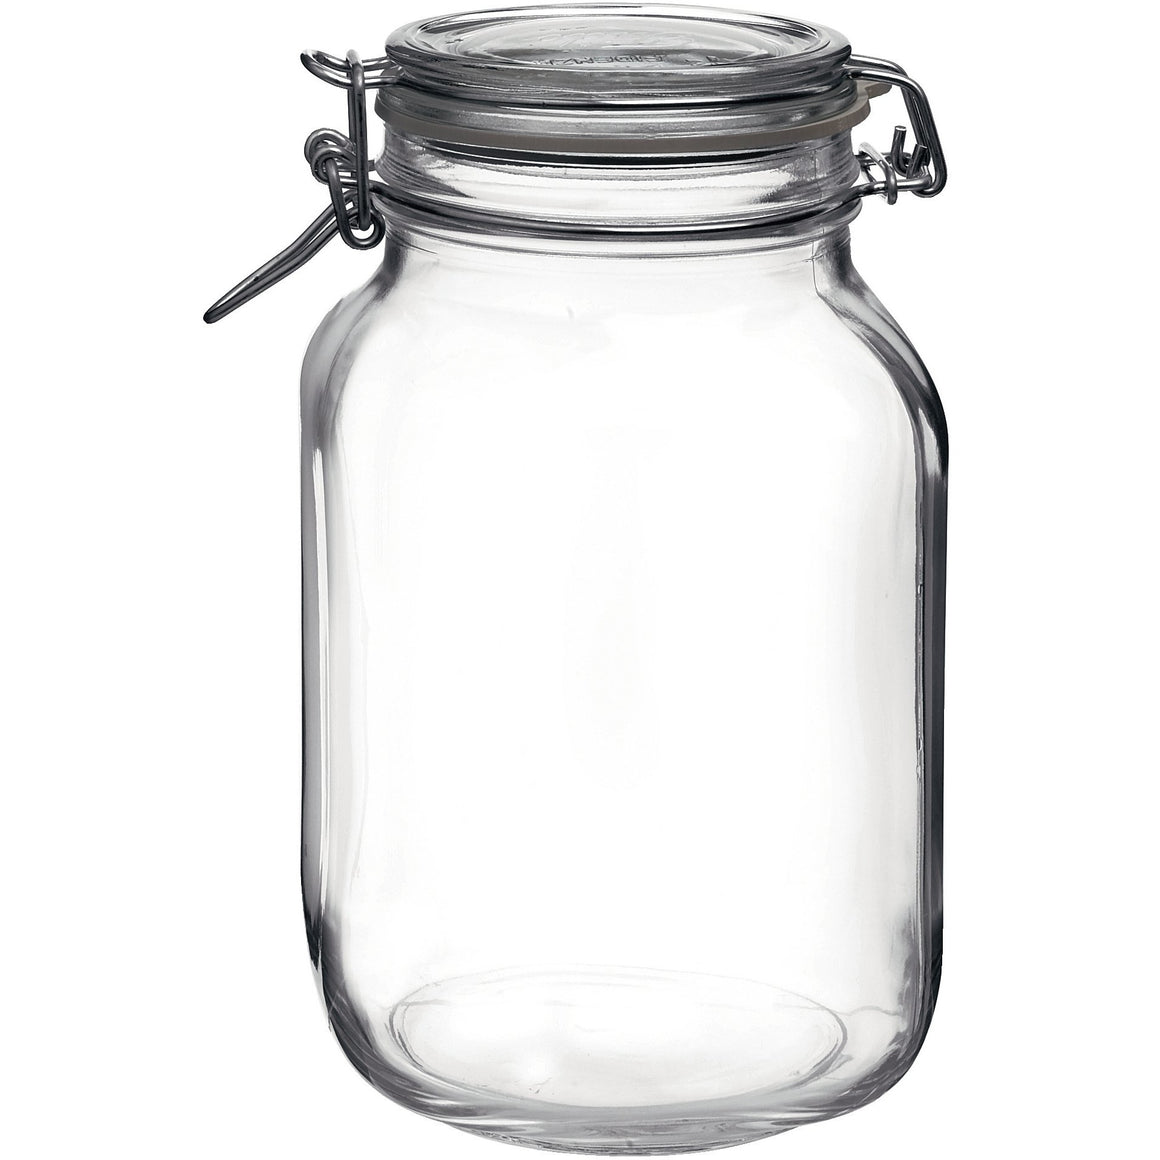 Fido Jar - Clear